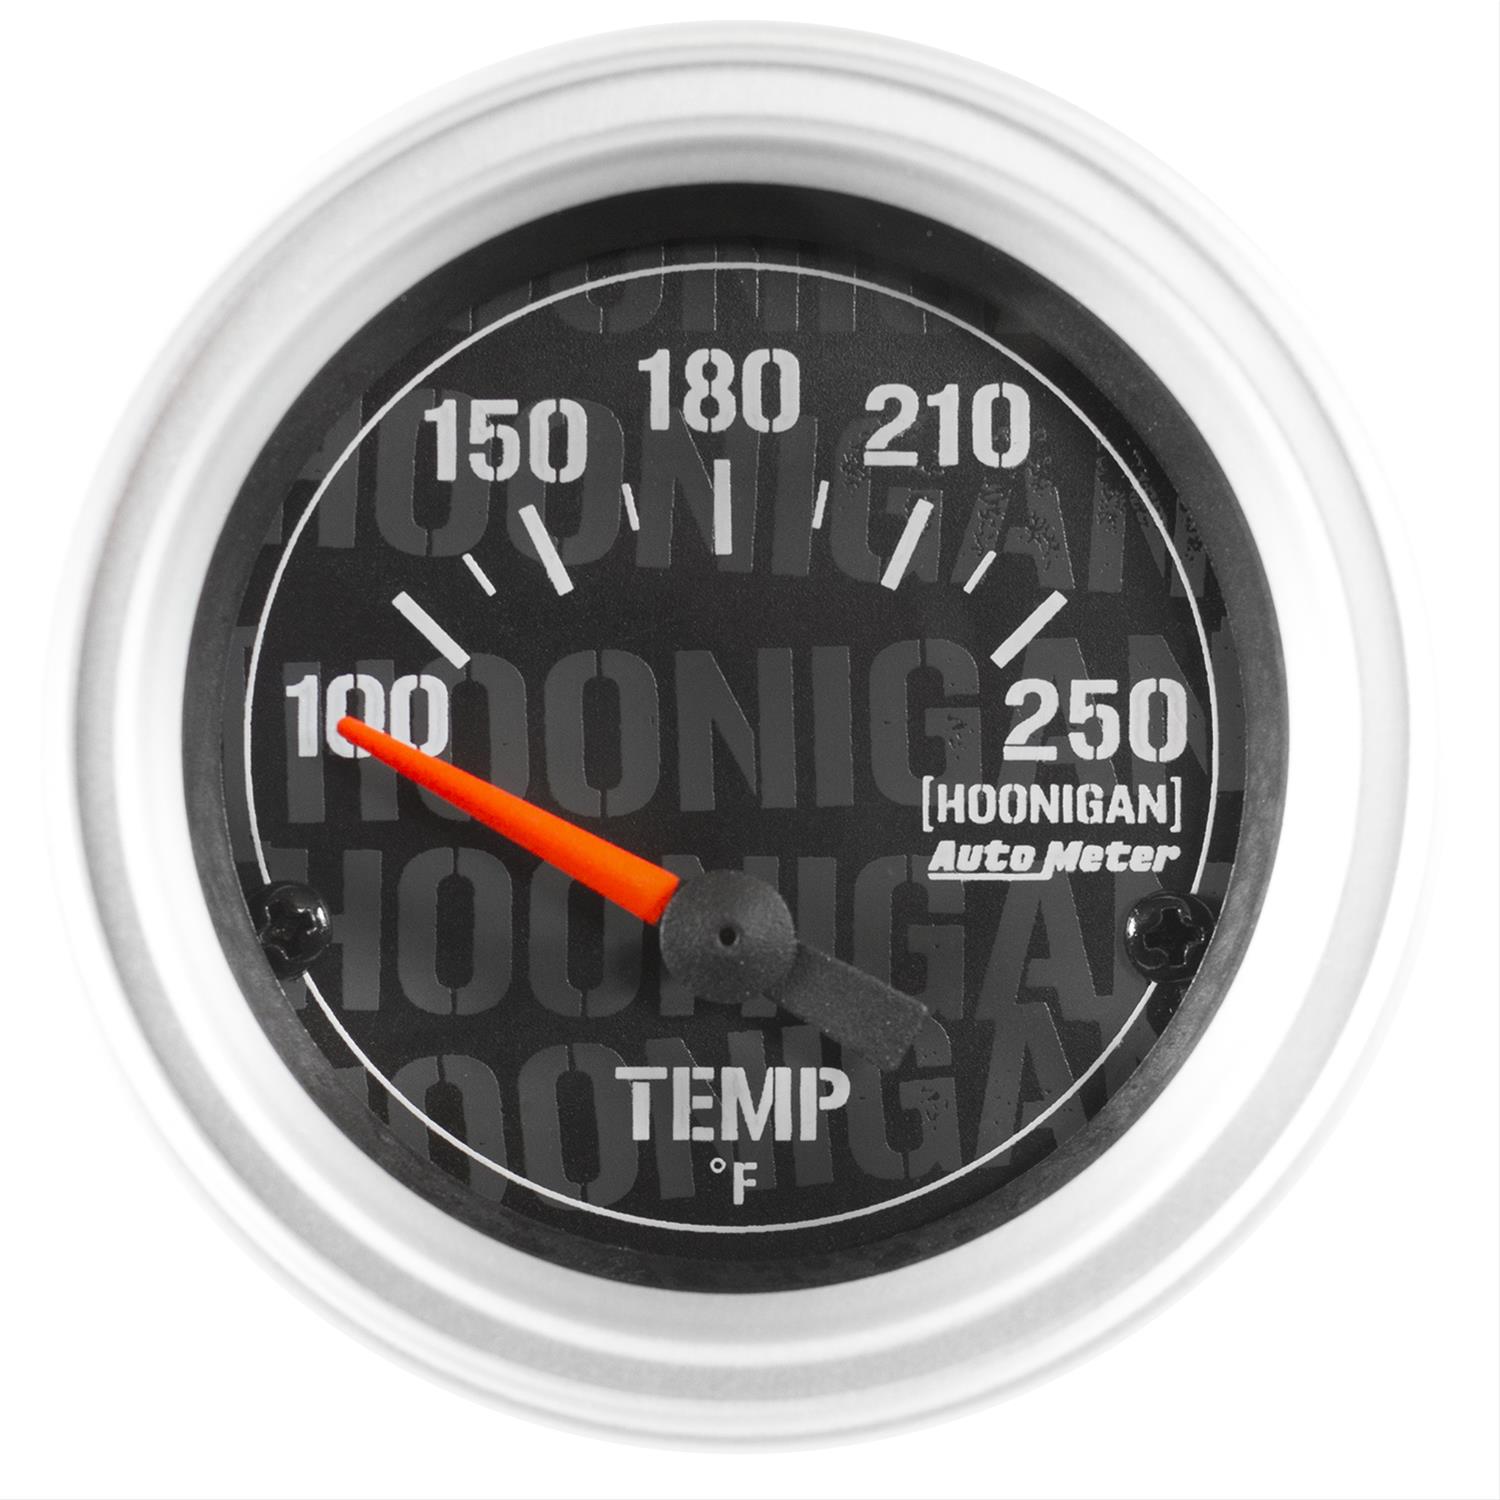 Auto Meter 4337 Ultra-Lite Electric Water Temperature Gauge, Silver